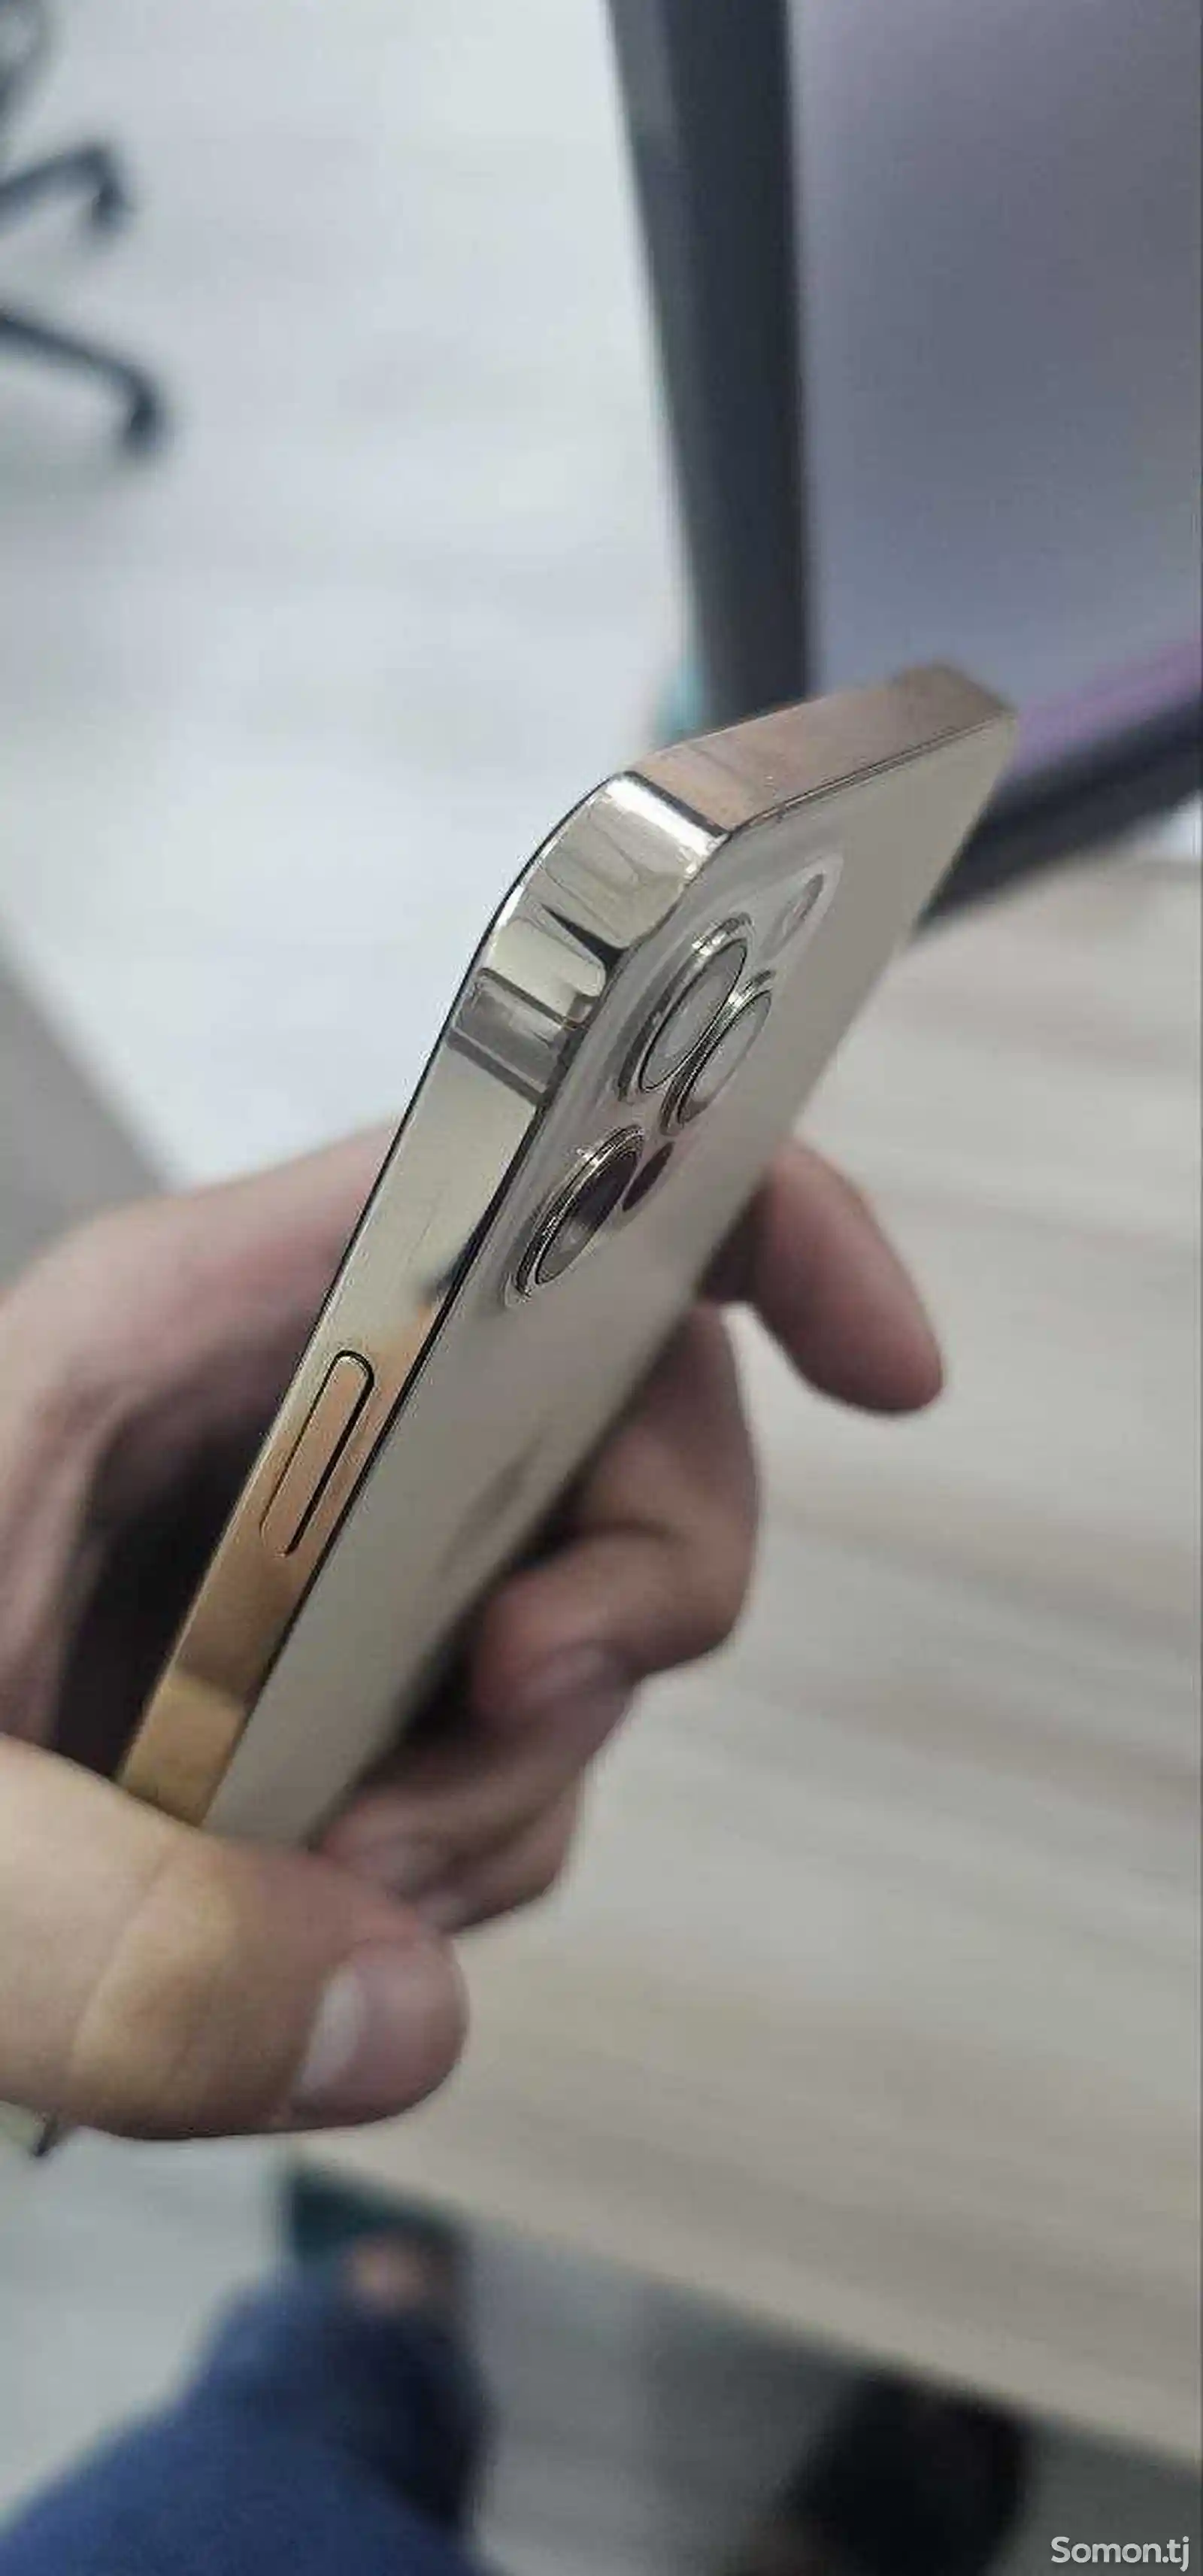 Apple iPhone 12 pro, 128 gb, Gold-1